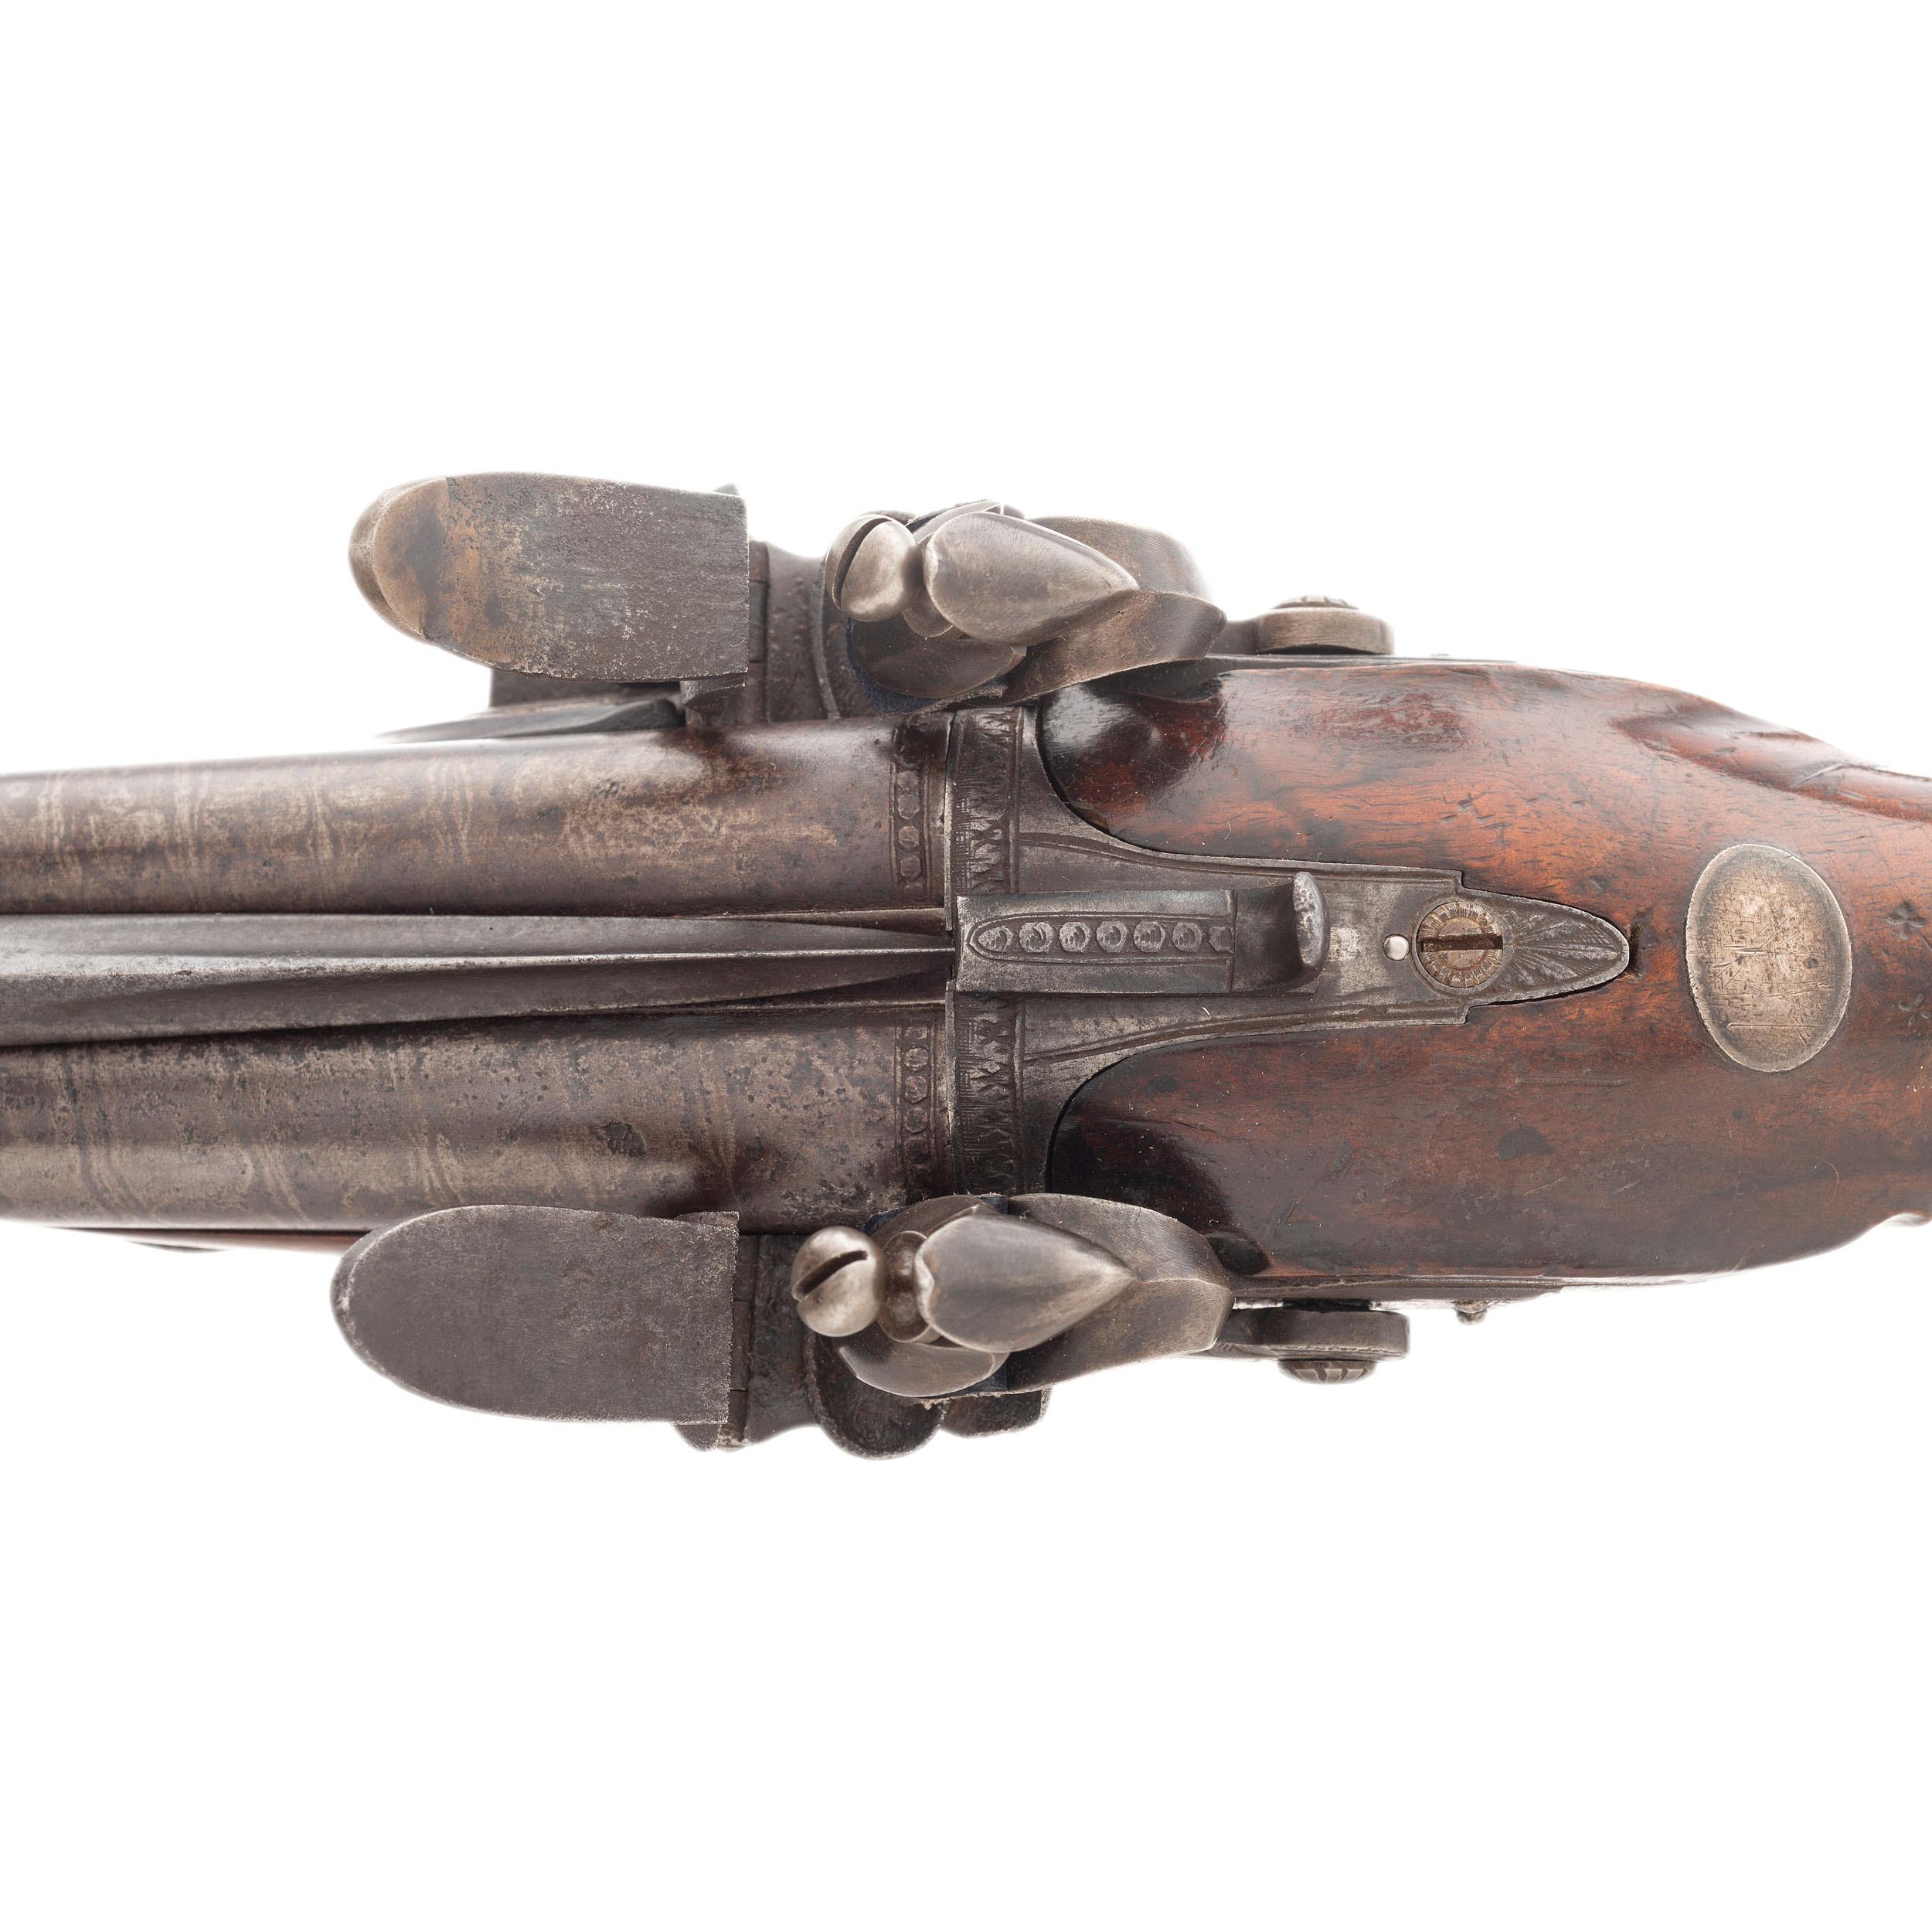 Double Barrel Flintlock Pistol with Snap Bayonet by Williams